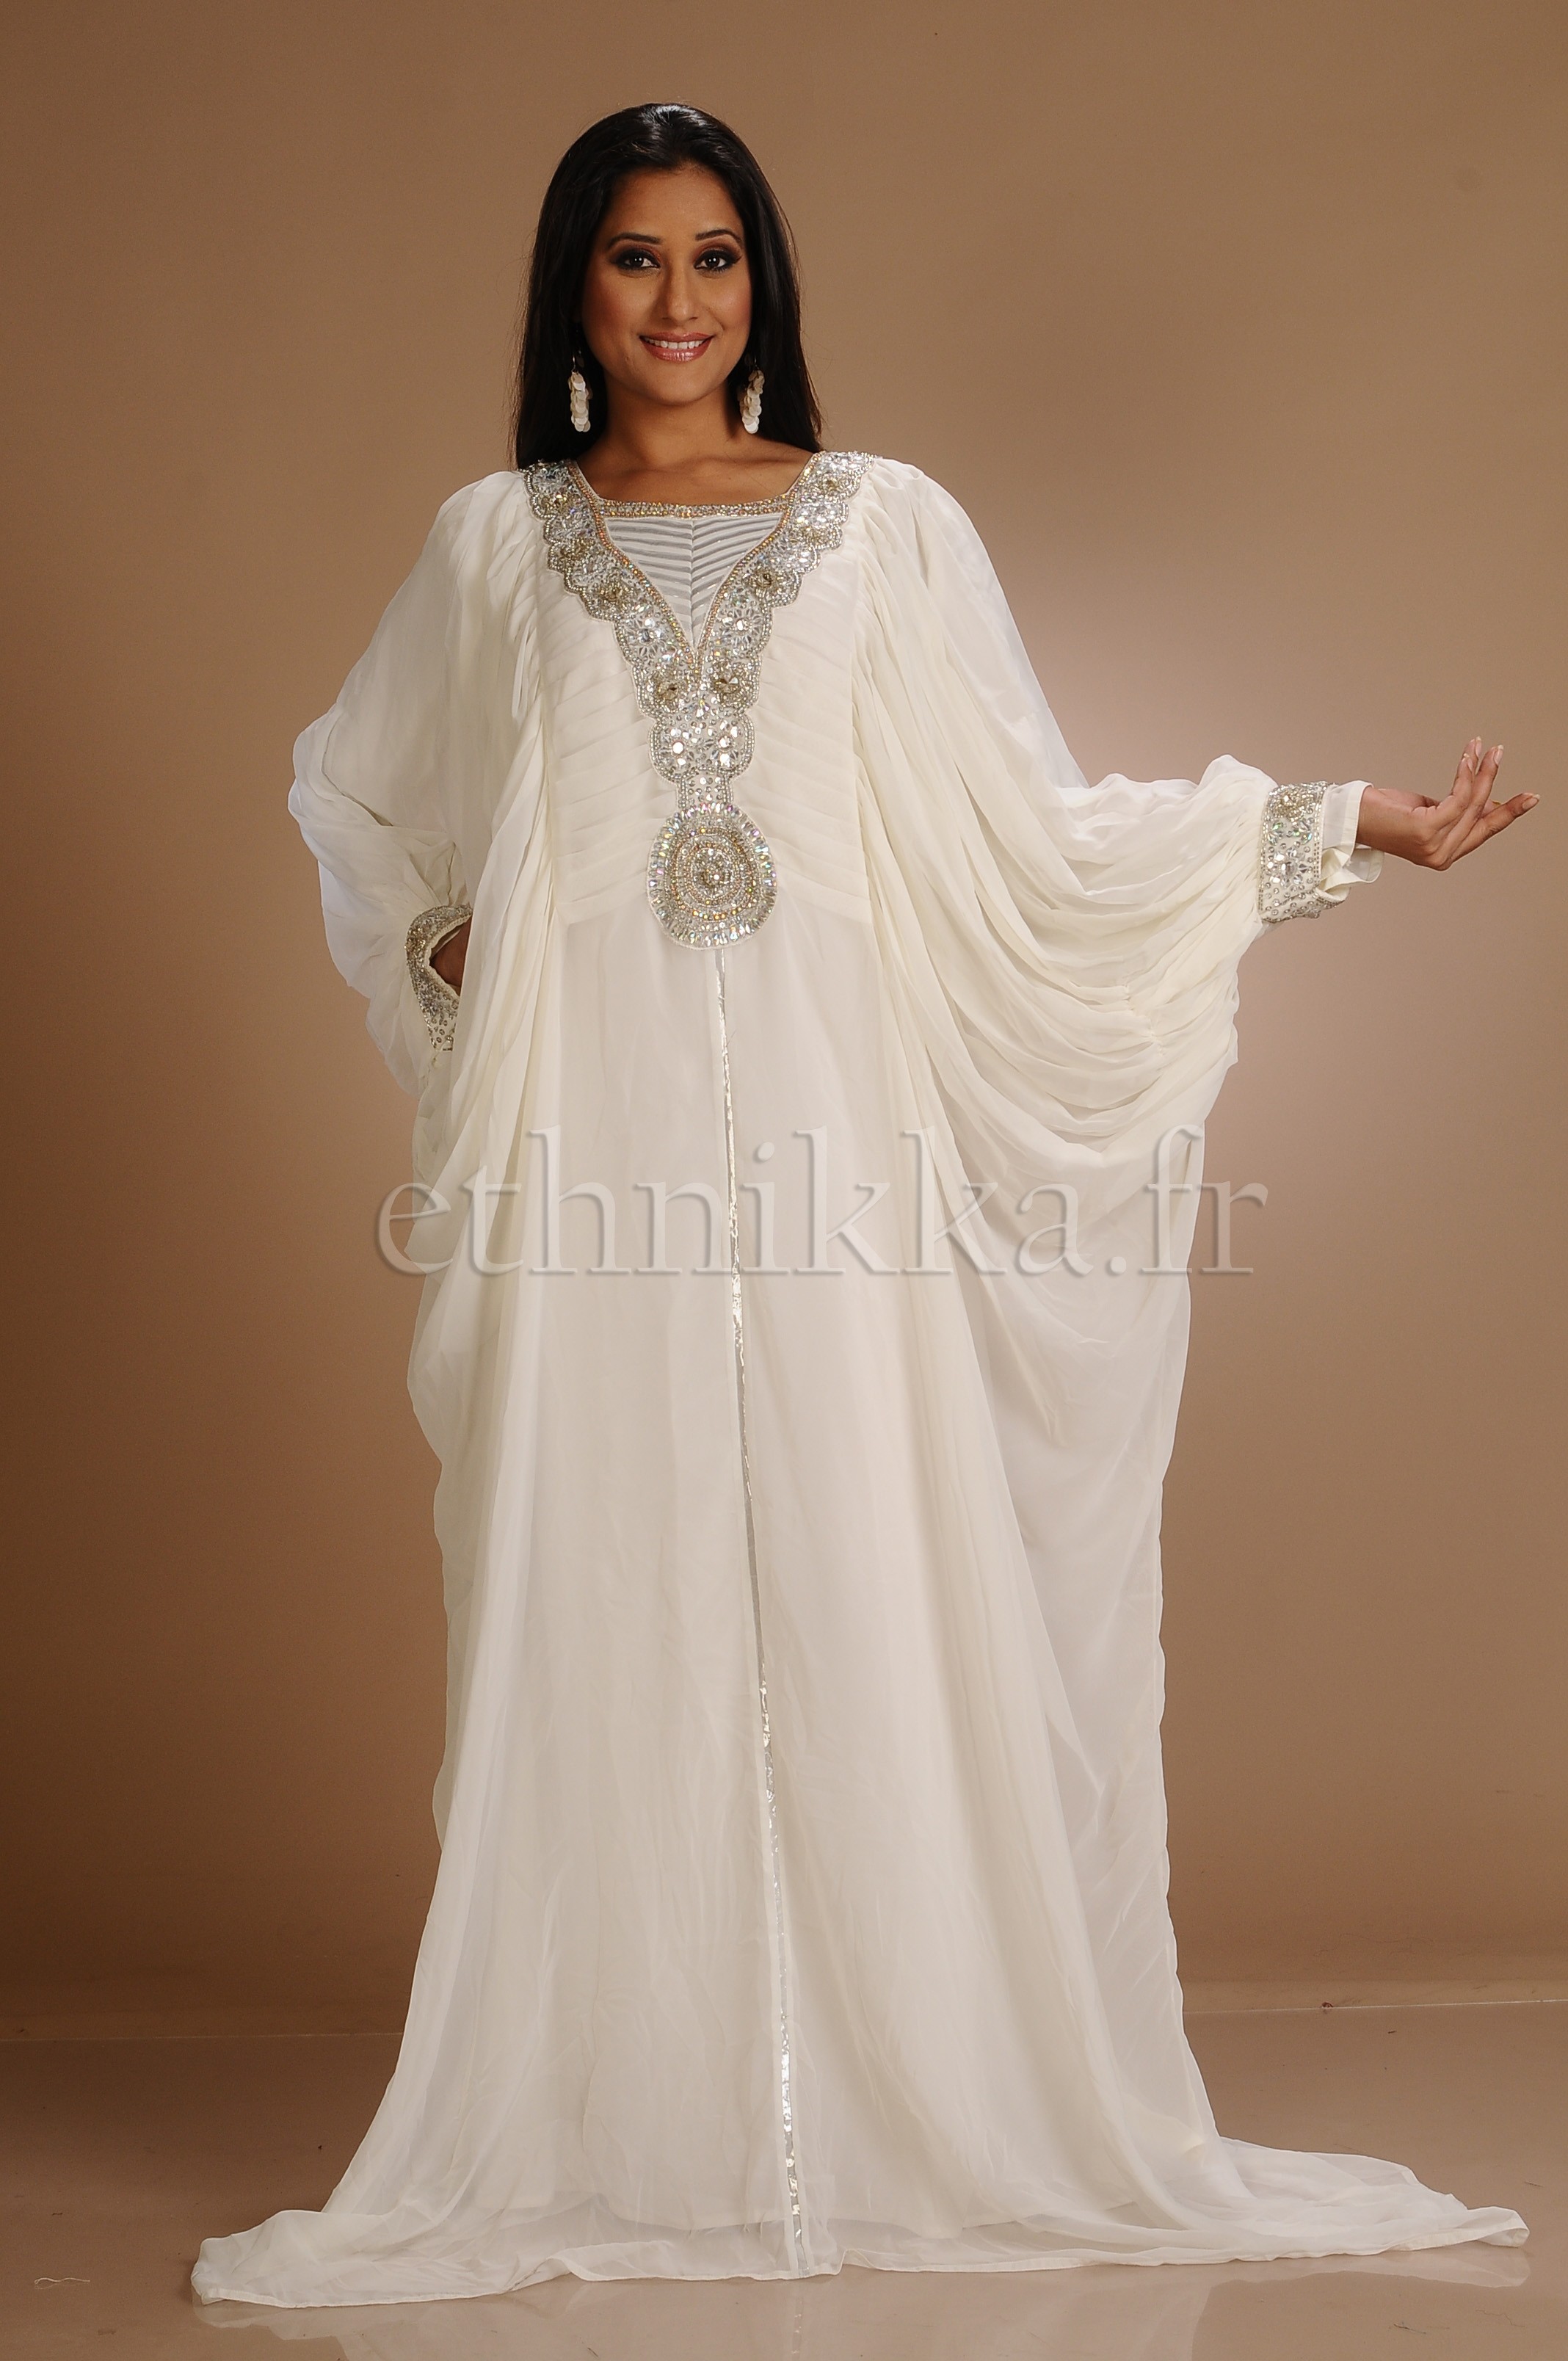 robe orientale mariage pas cher, robe arabe mariage , caftan mariage